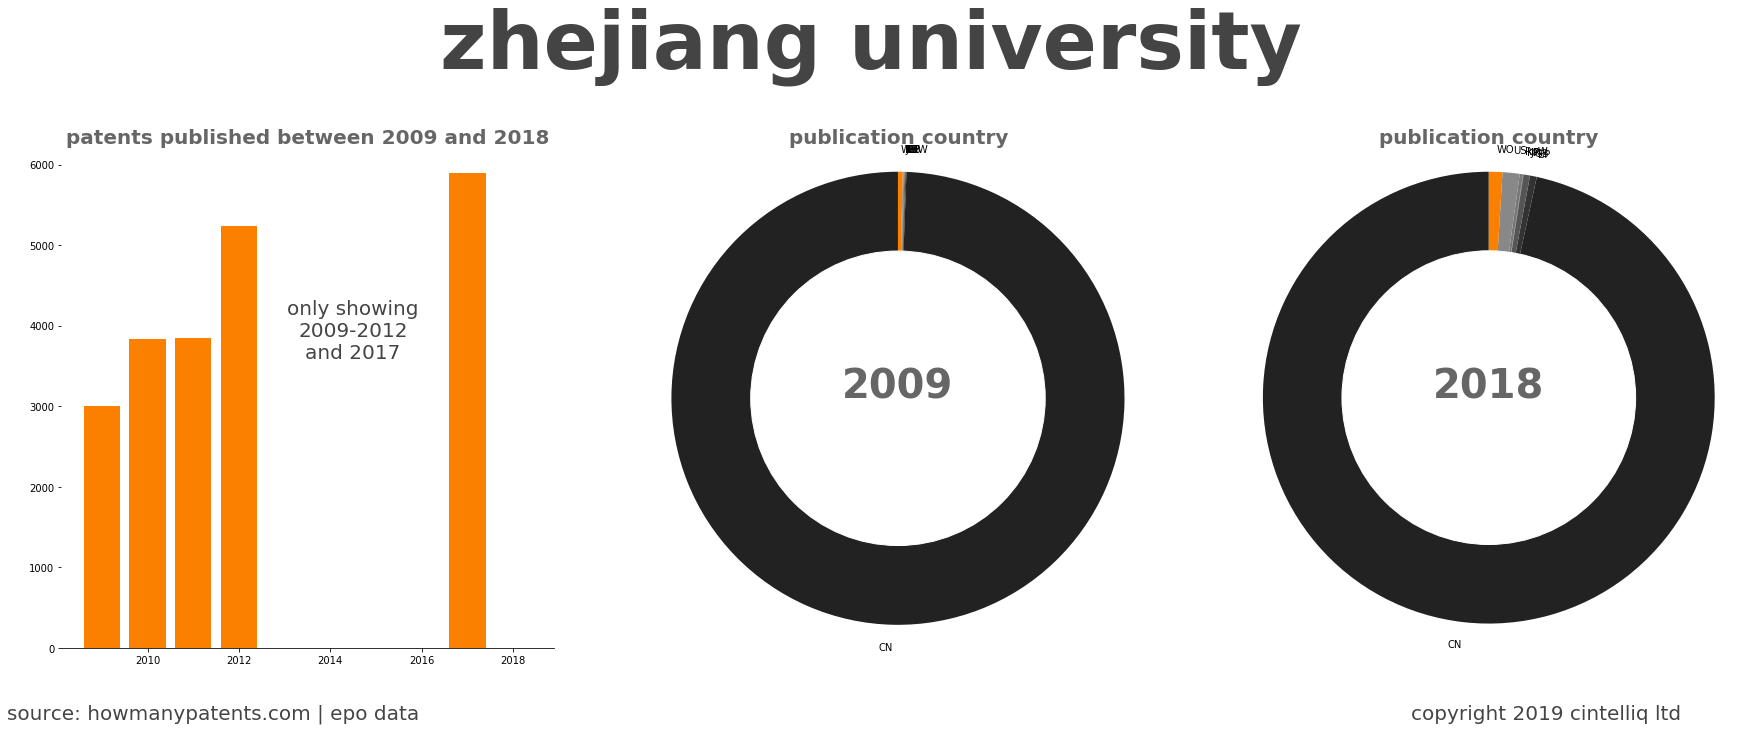 summary of patents for Zhejiang University